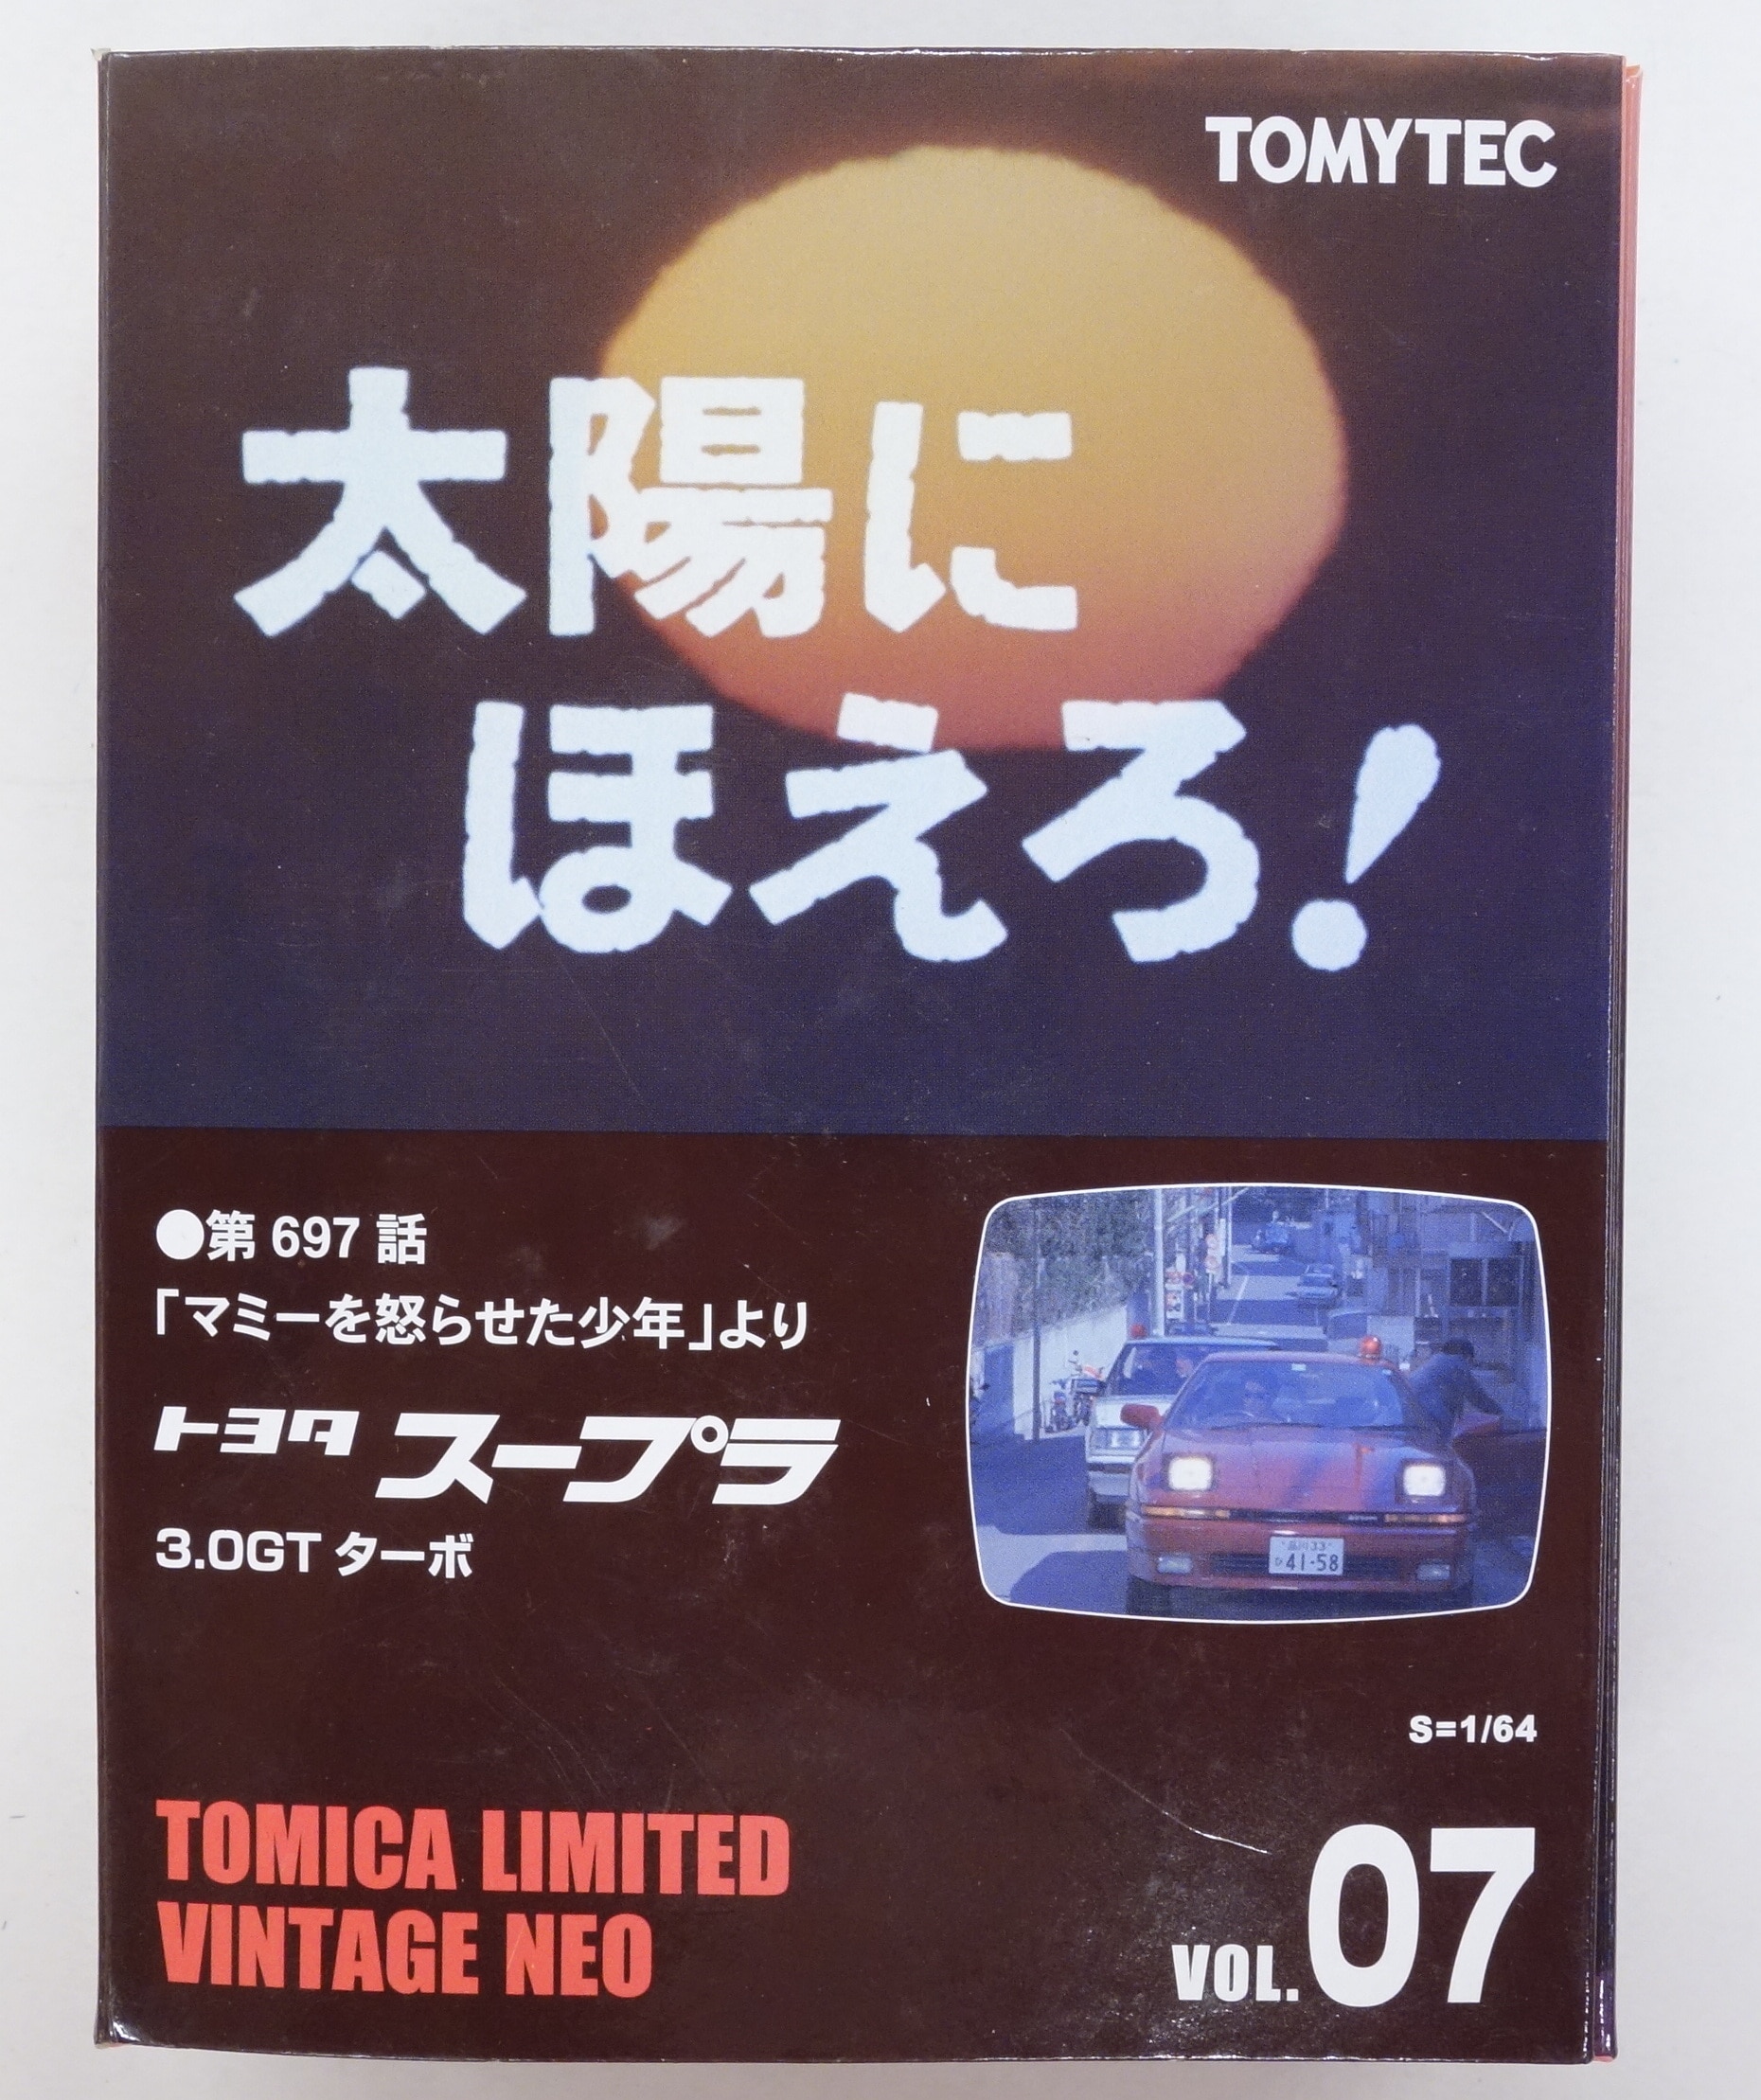 Tomytec Tomica Limited Vintage Neo トヨタ スープラ3 0gt ターボ 第697話 マミーを怒らせた少年より Vol07 まんだらけ Mandarake